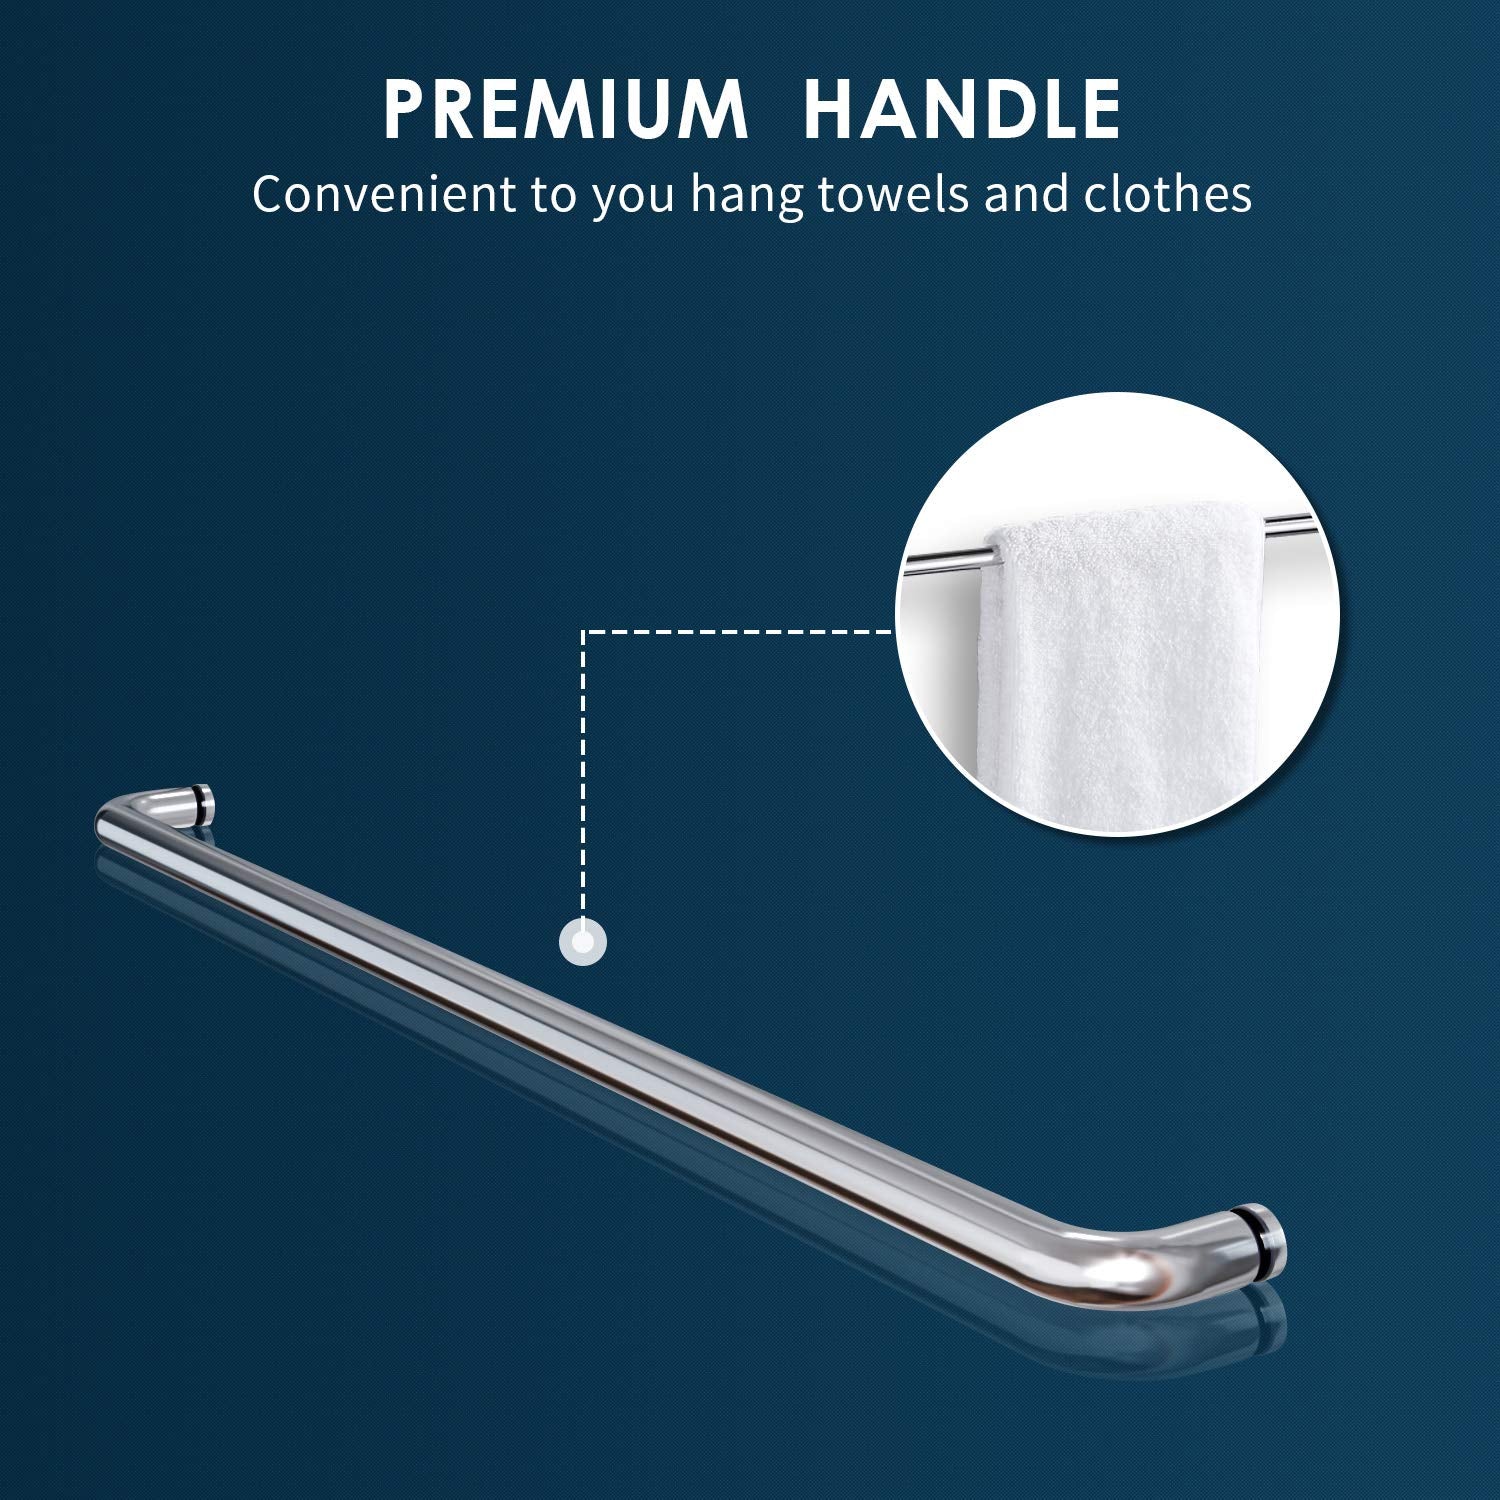 premium handle, convenient to you hang towels and clothes